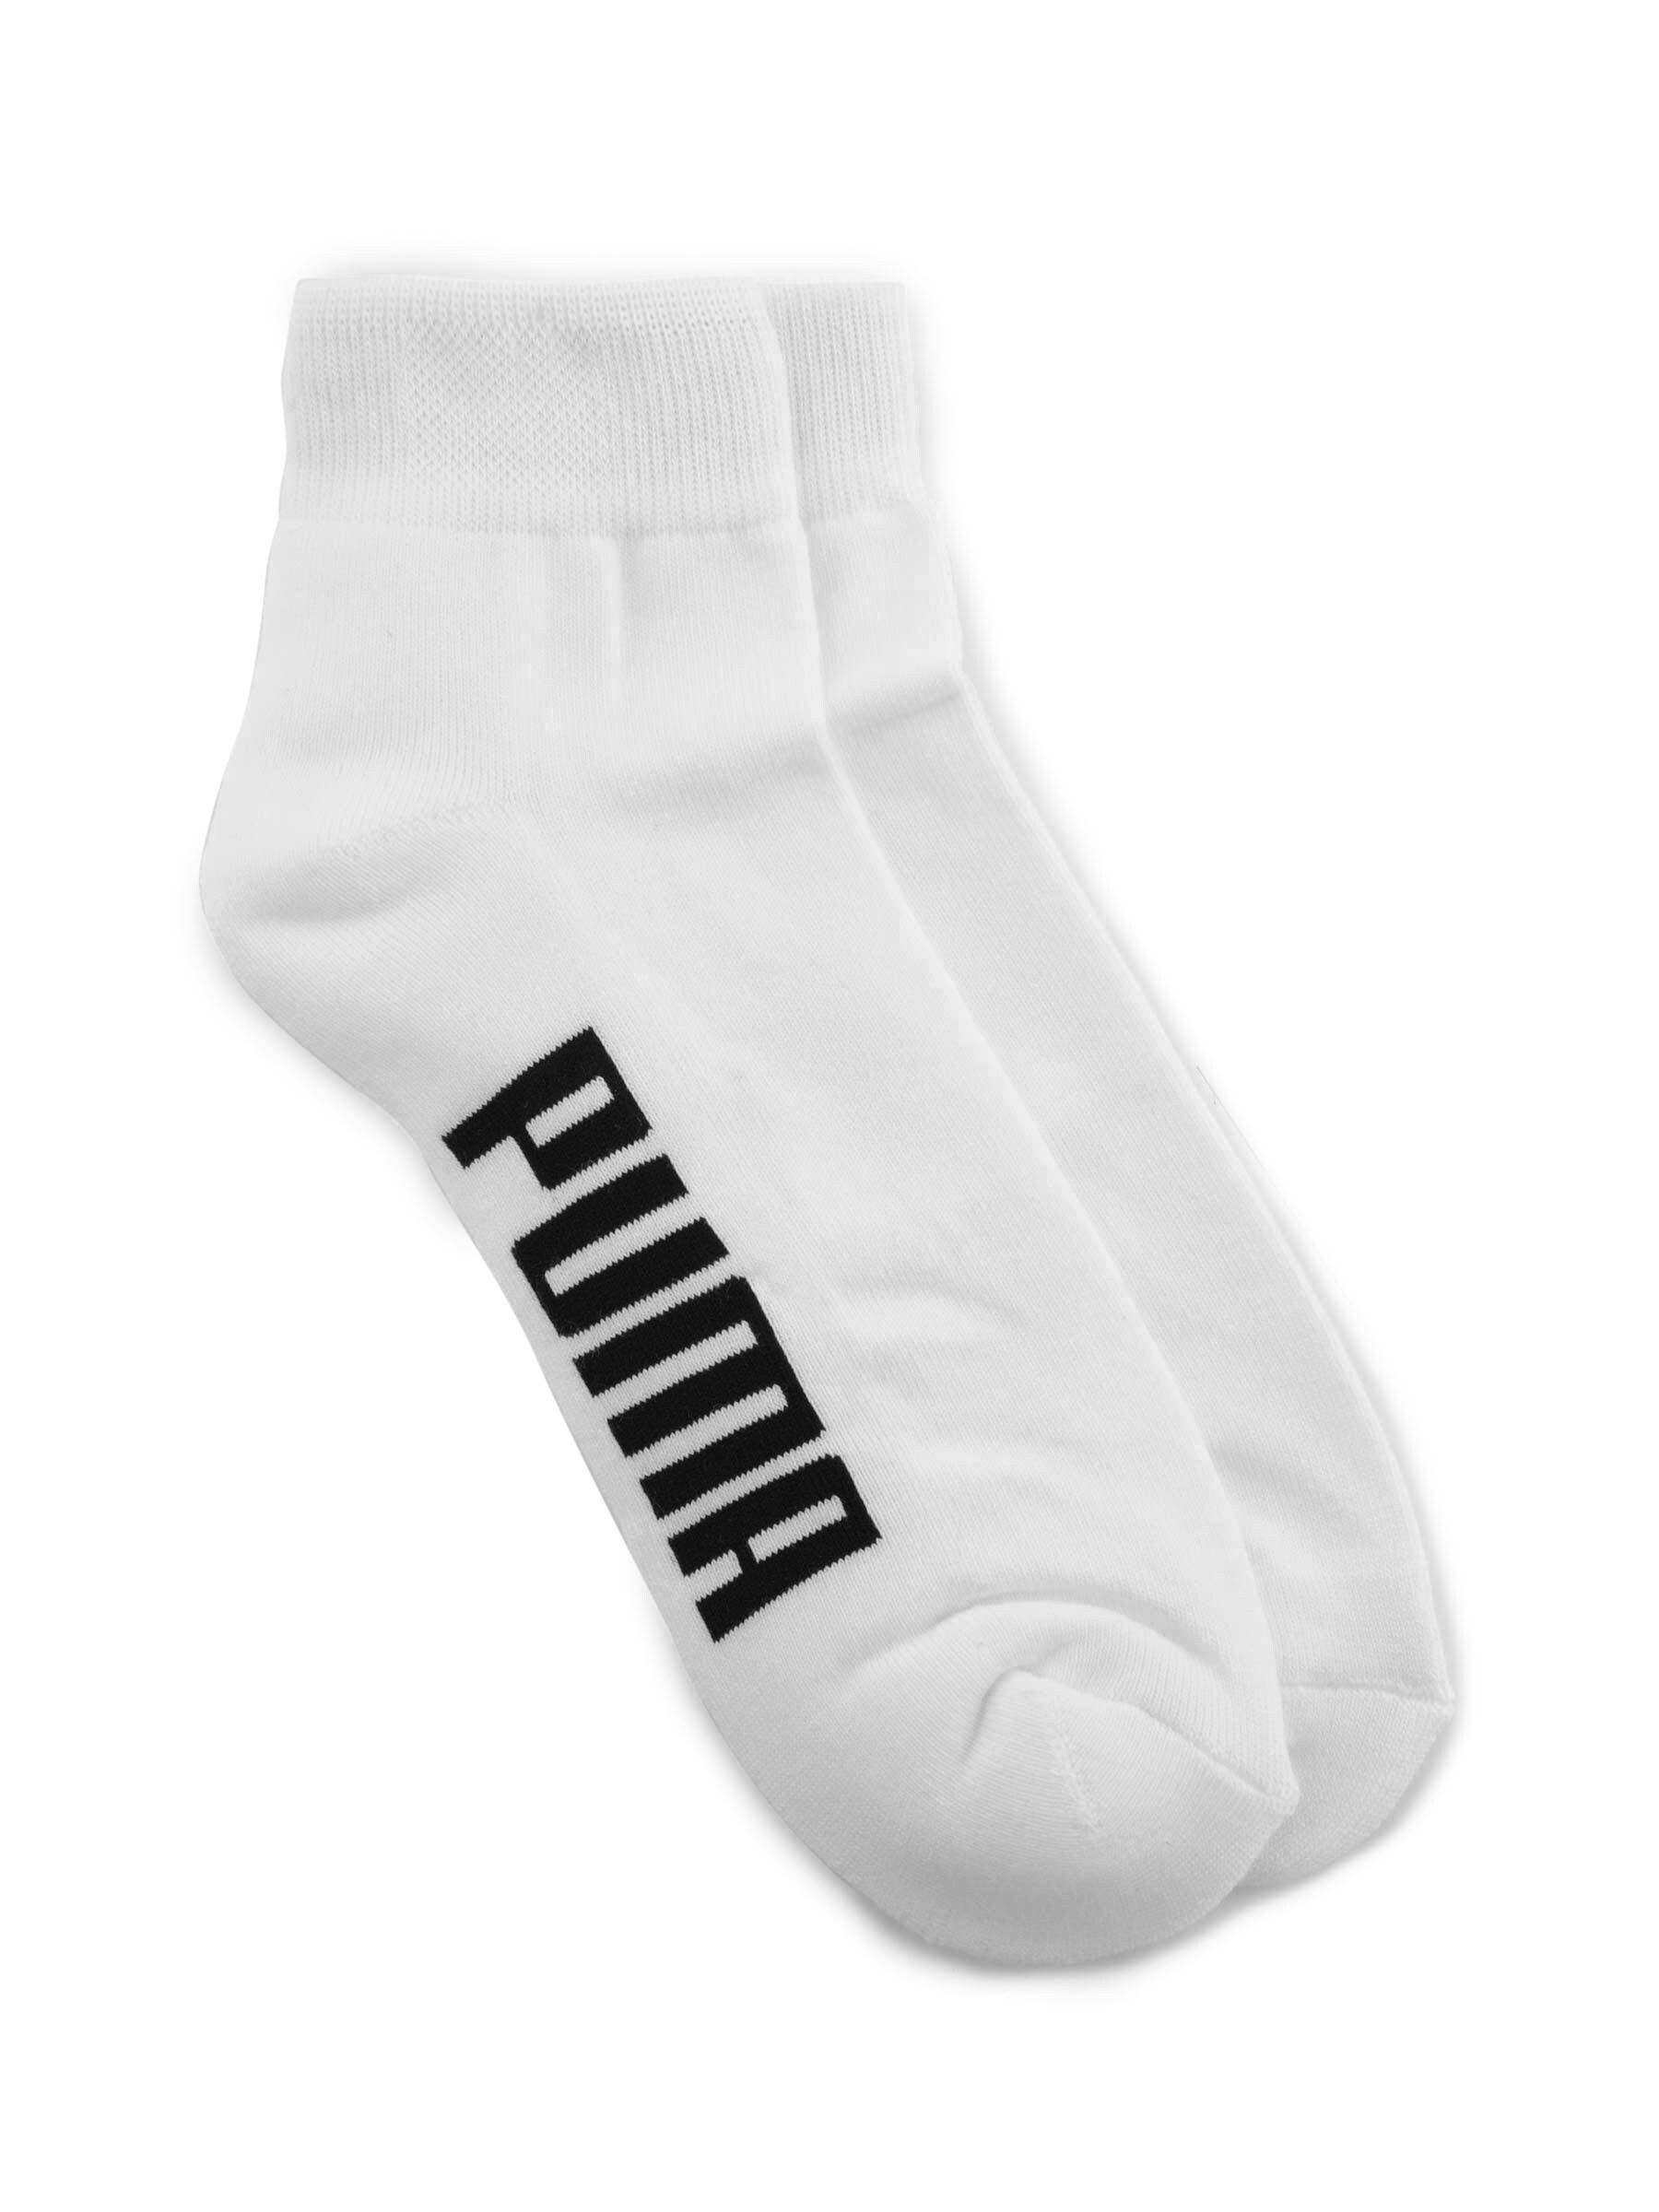 Puma Men Foundation Quarters White Socks